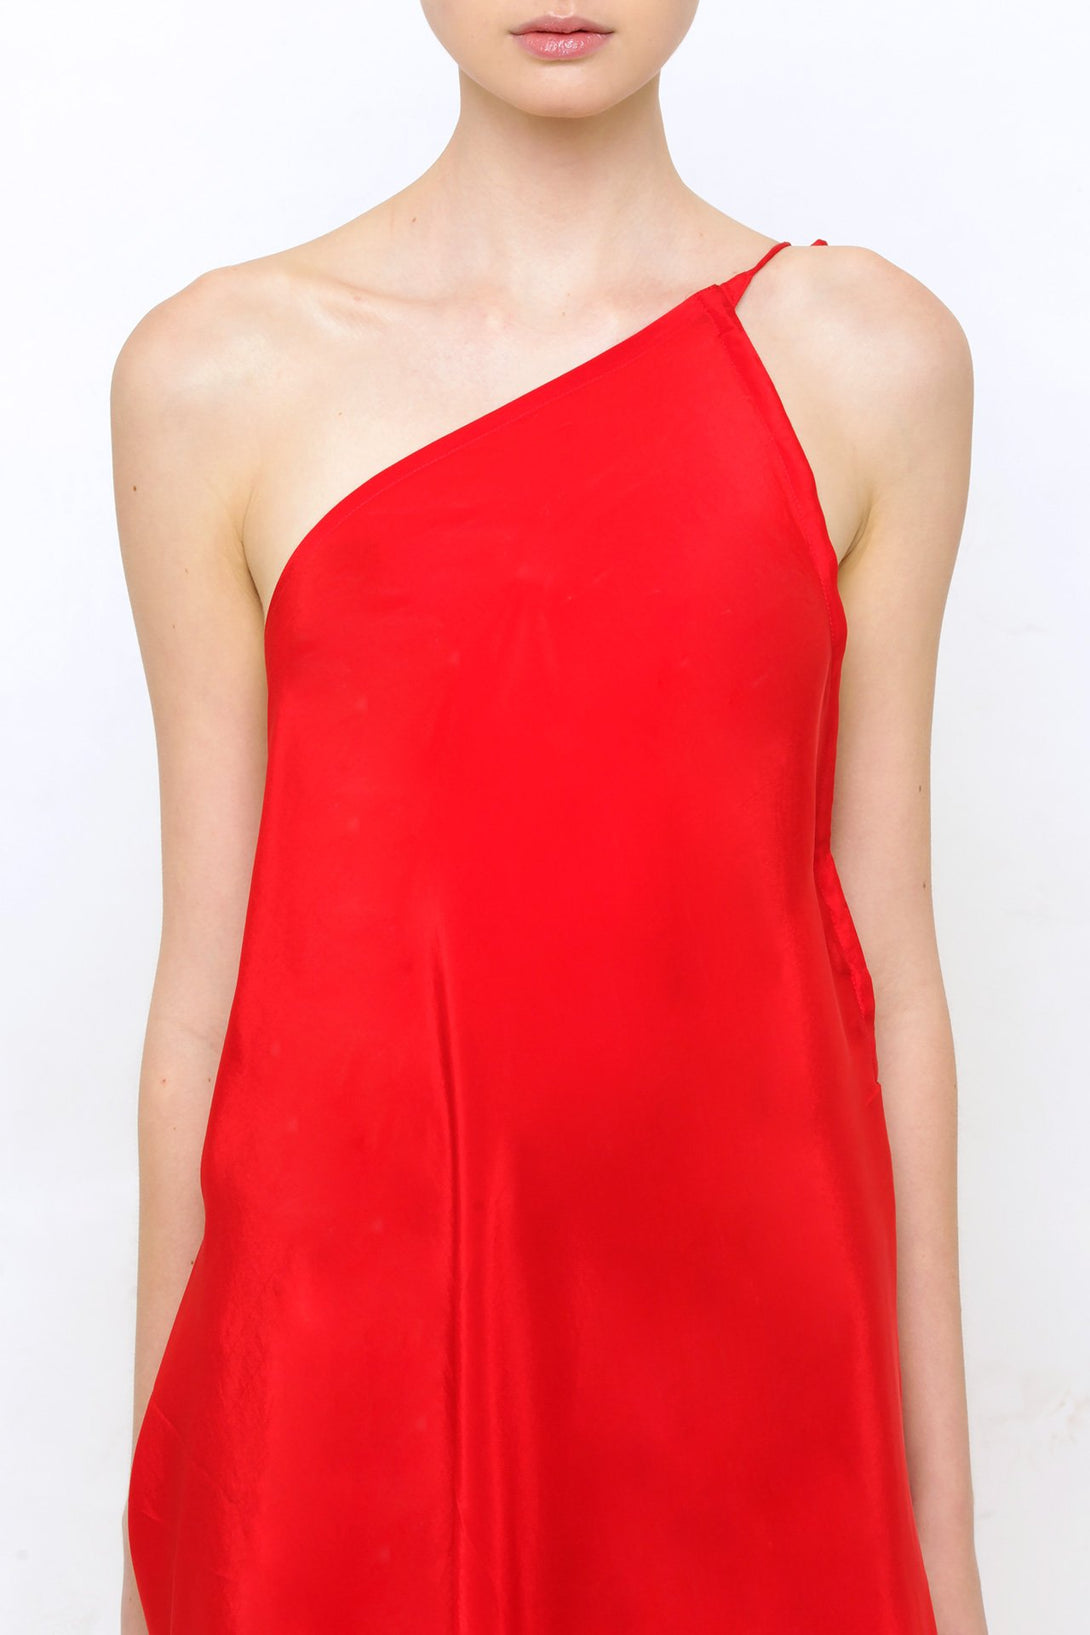  red dress short formal, short frock for women party wear, Shahida Parides, sleeveless short dress,